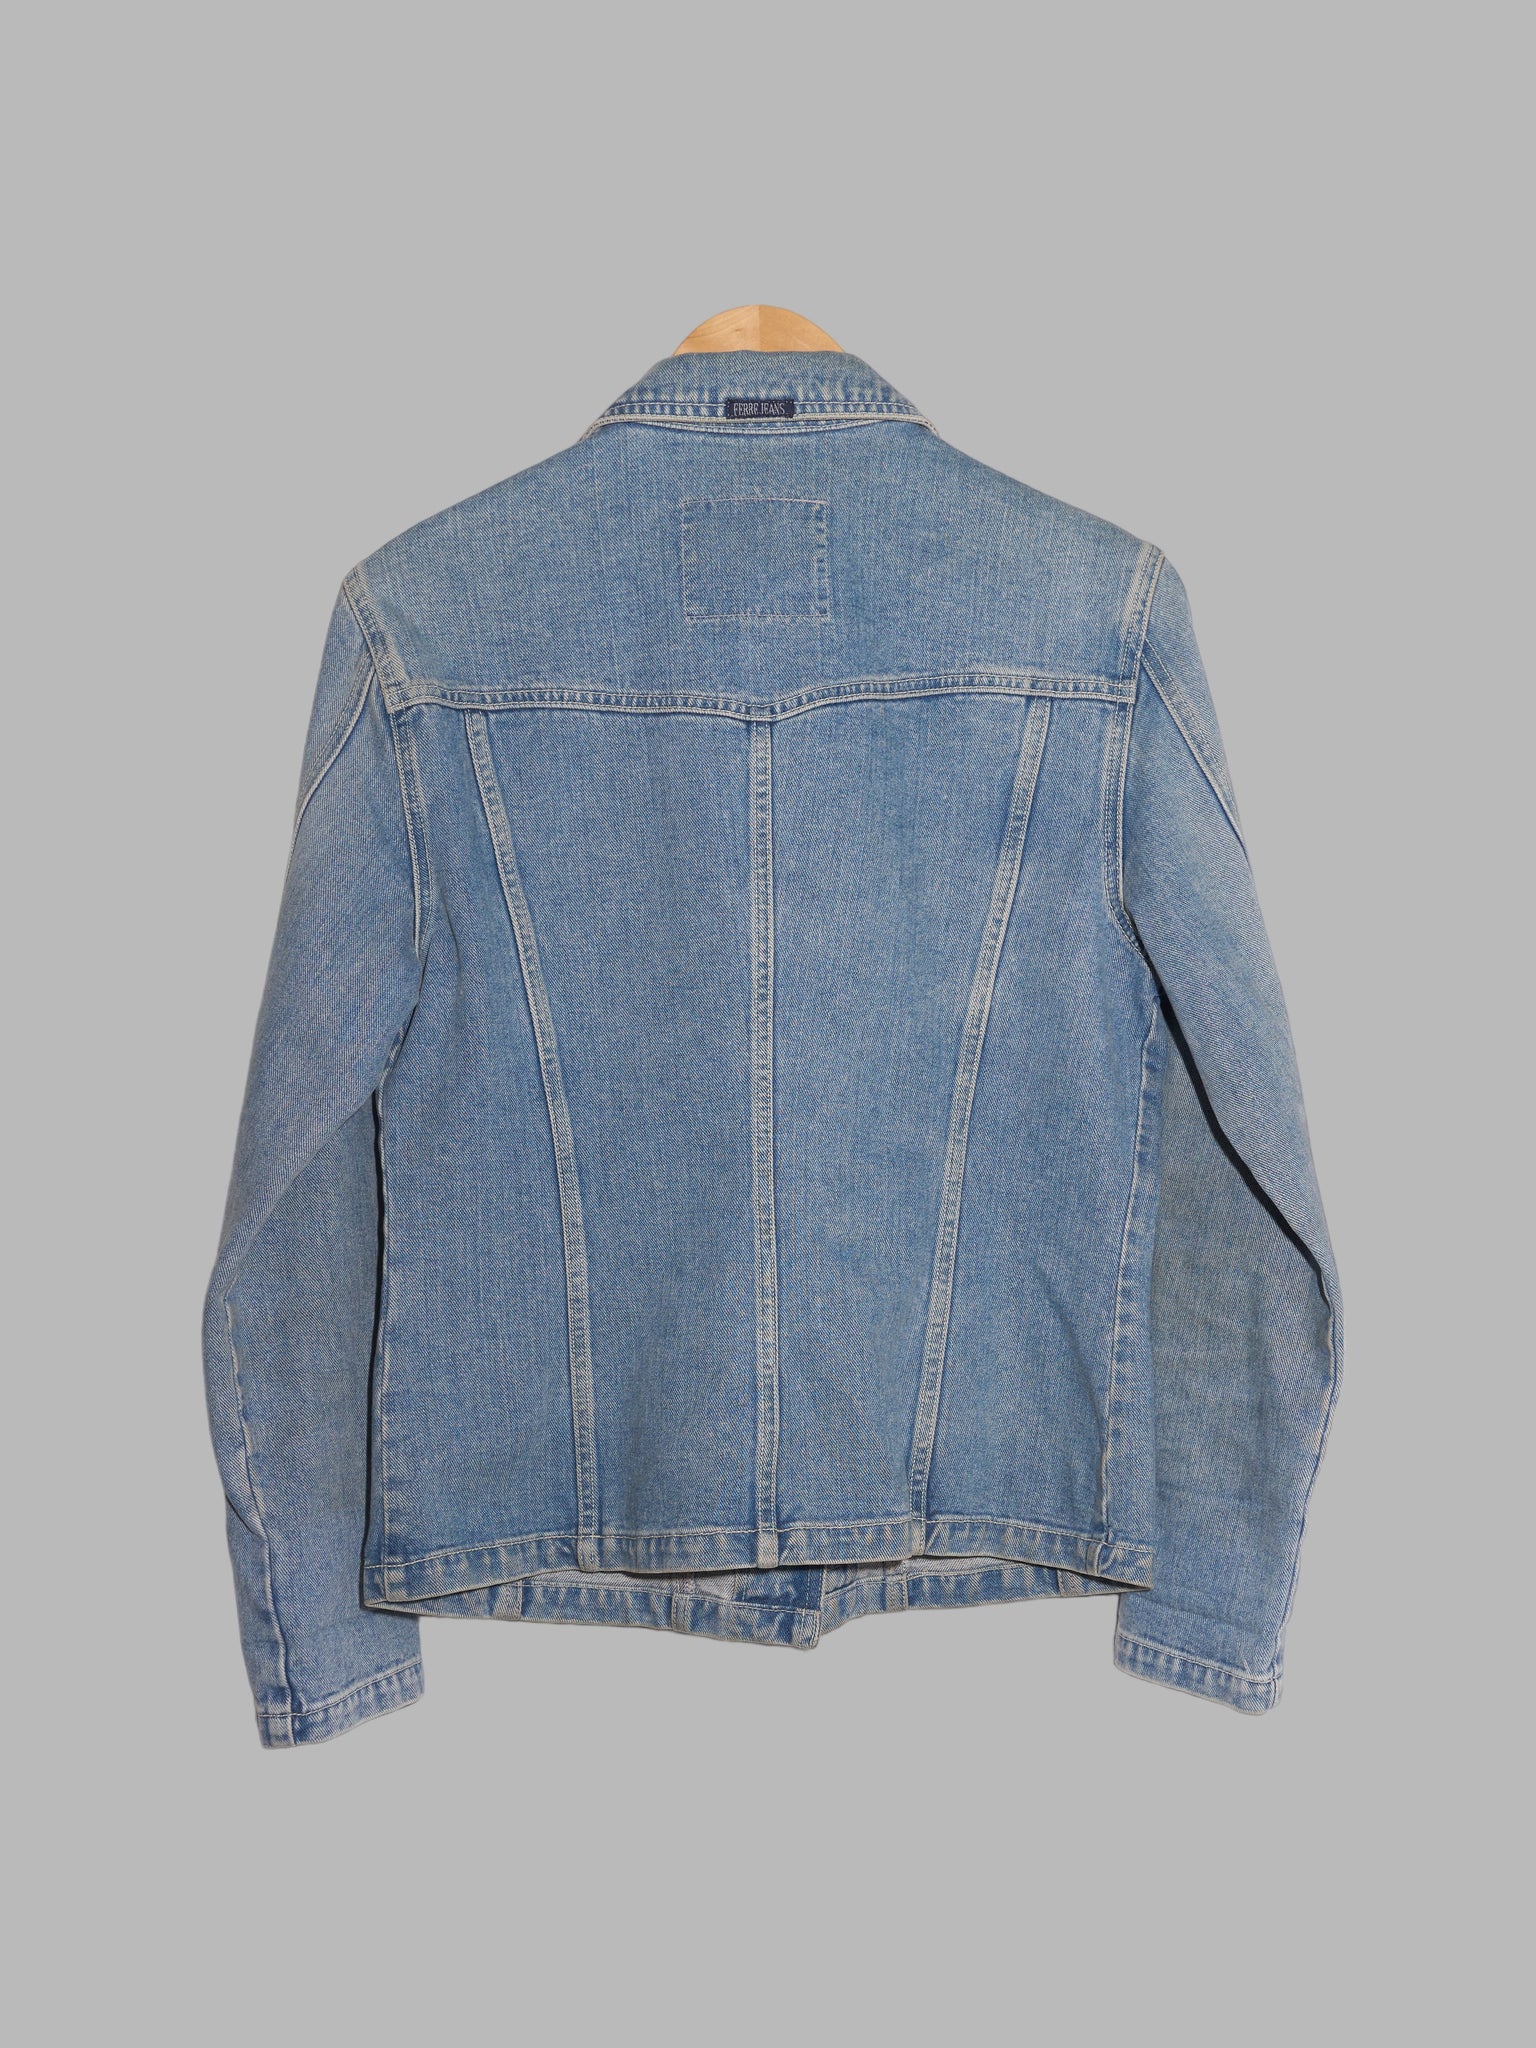 Gianfranco Ferre Jeans 1990s faded washed blue panelled denim jacket ...